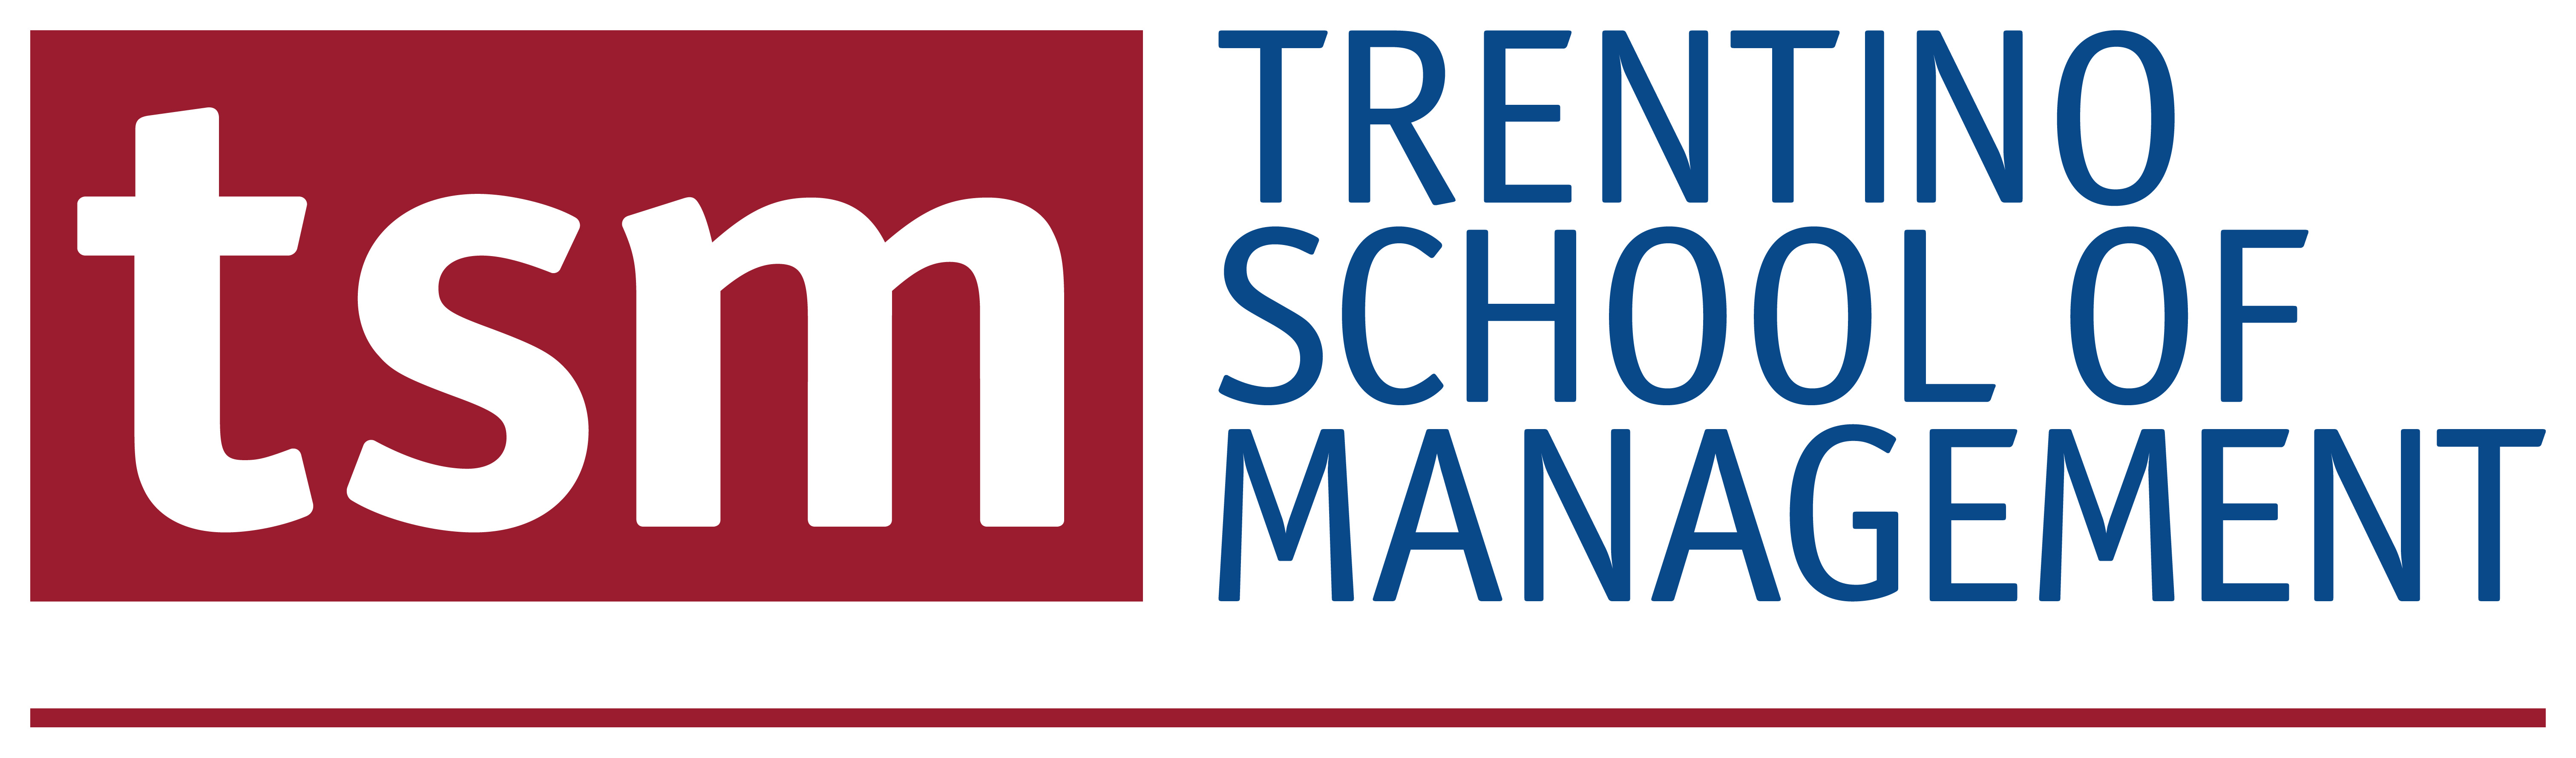 Trentino SchoolOfManagement